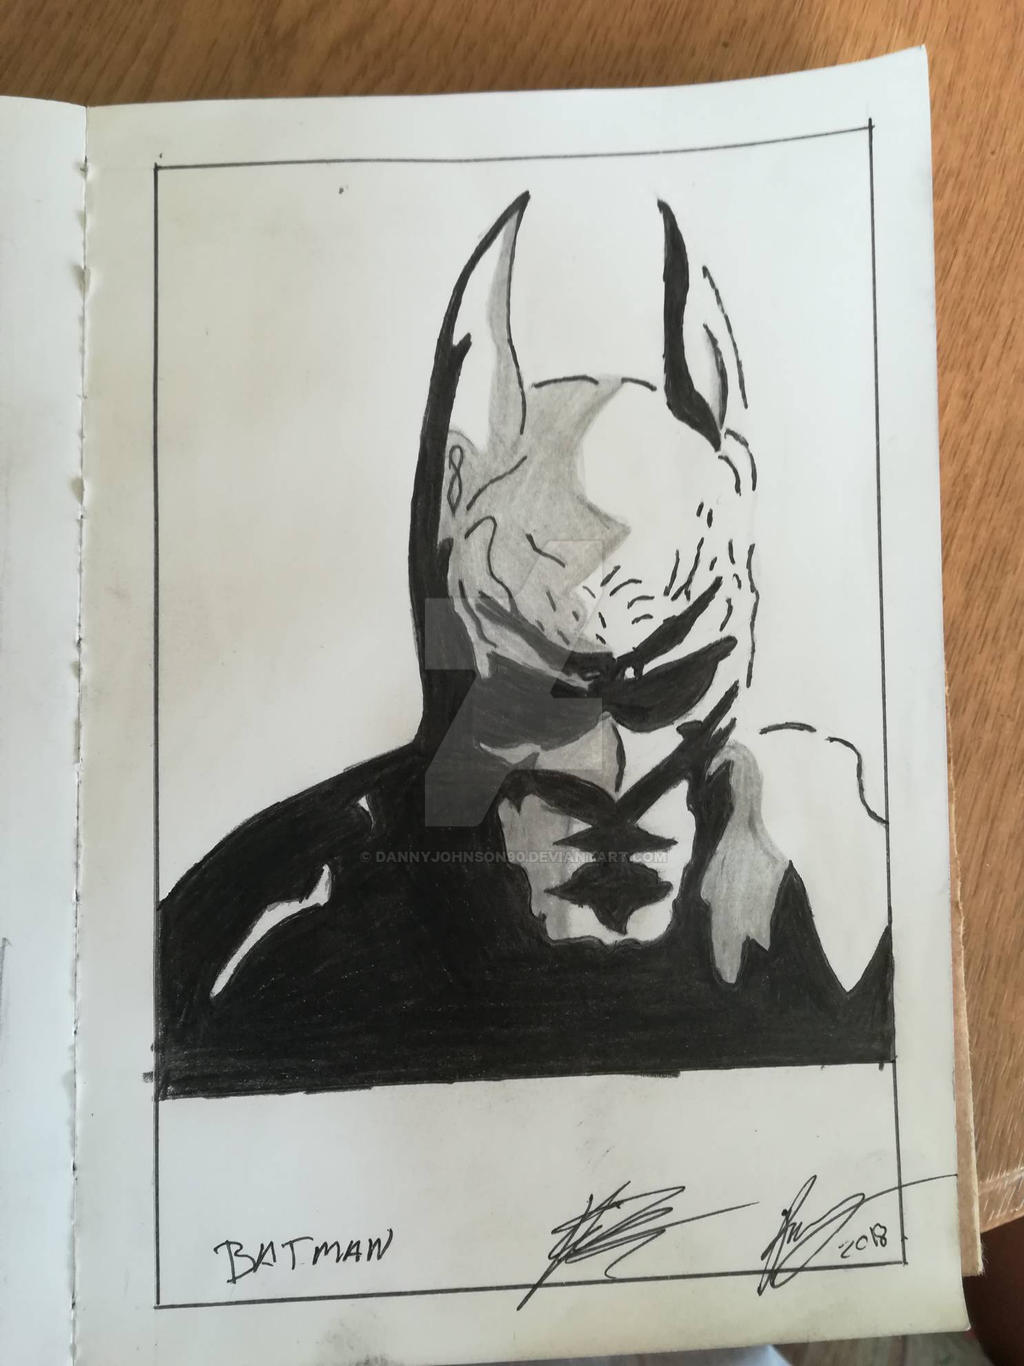 batman abstract sketch by DannyJohnson90 on DeviantArt